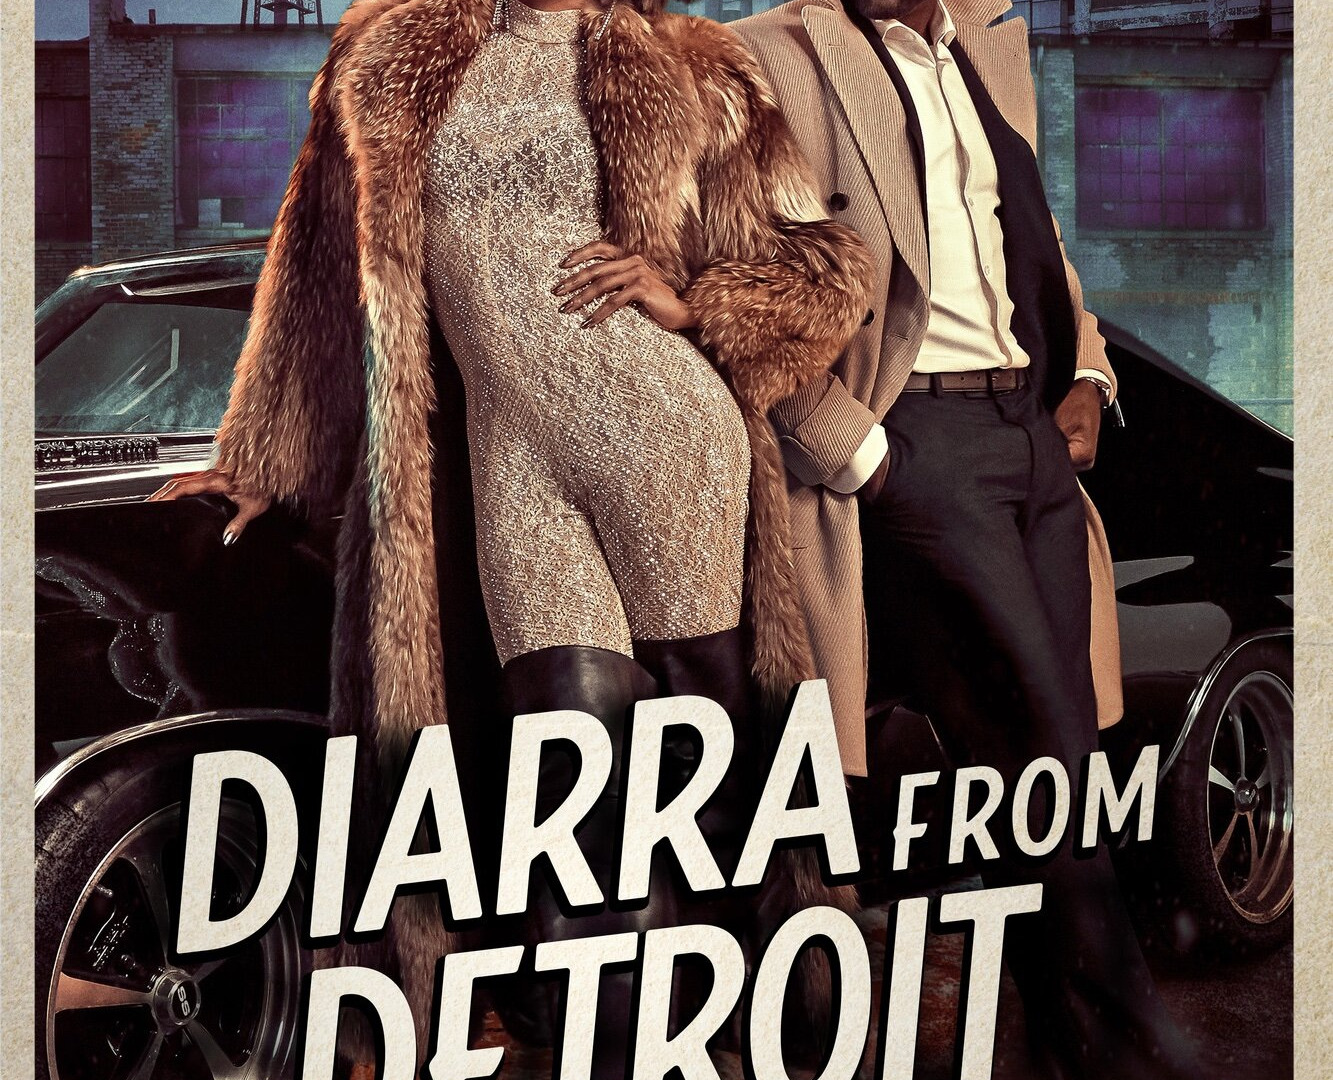 Show Diarra from Detroit